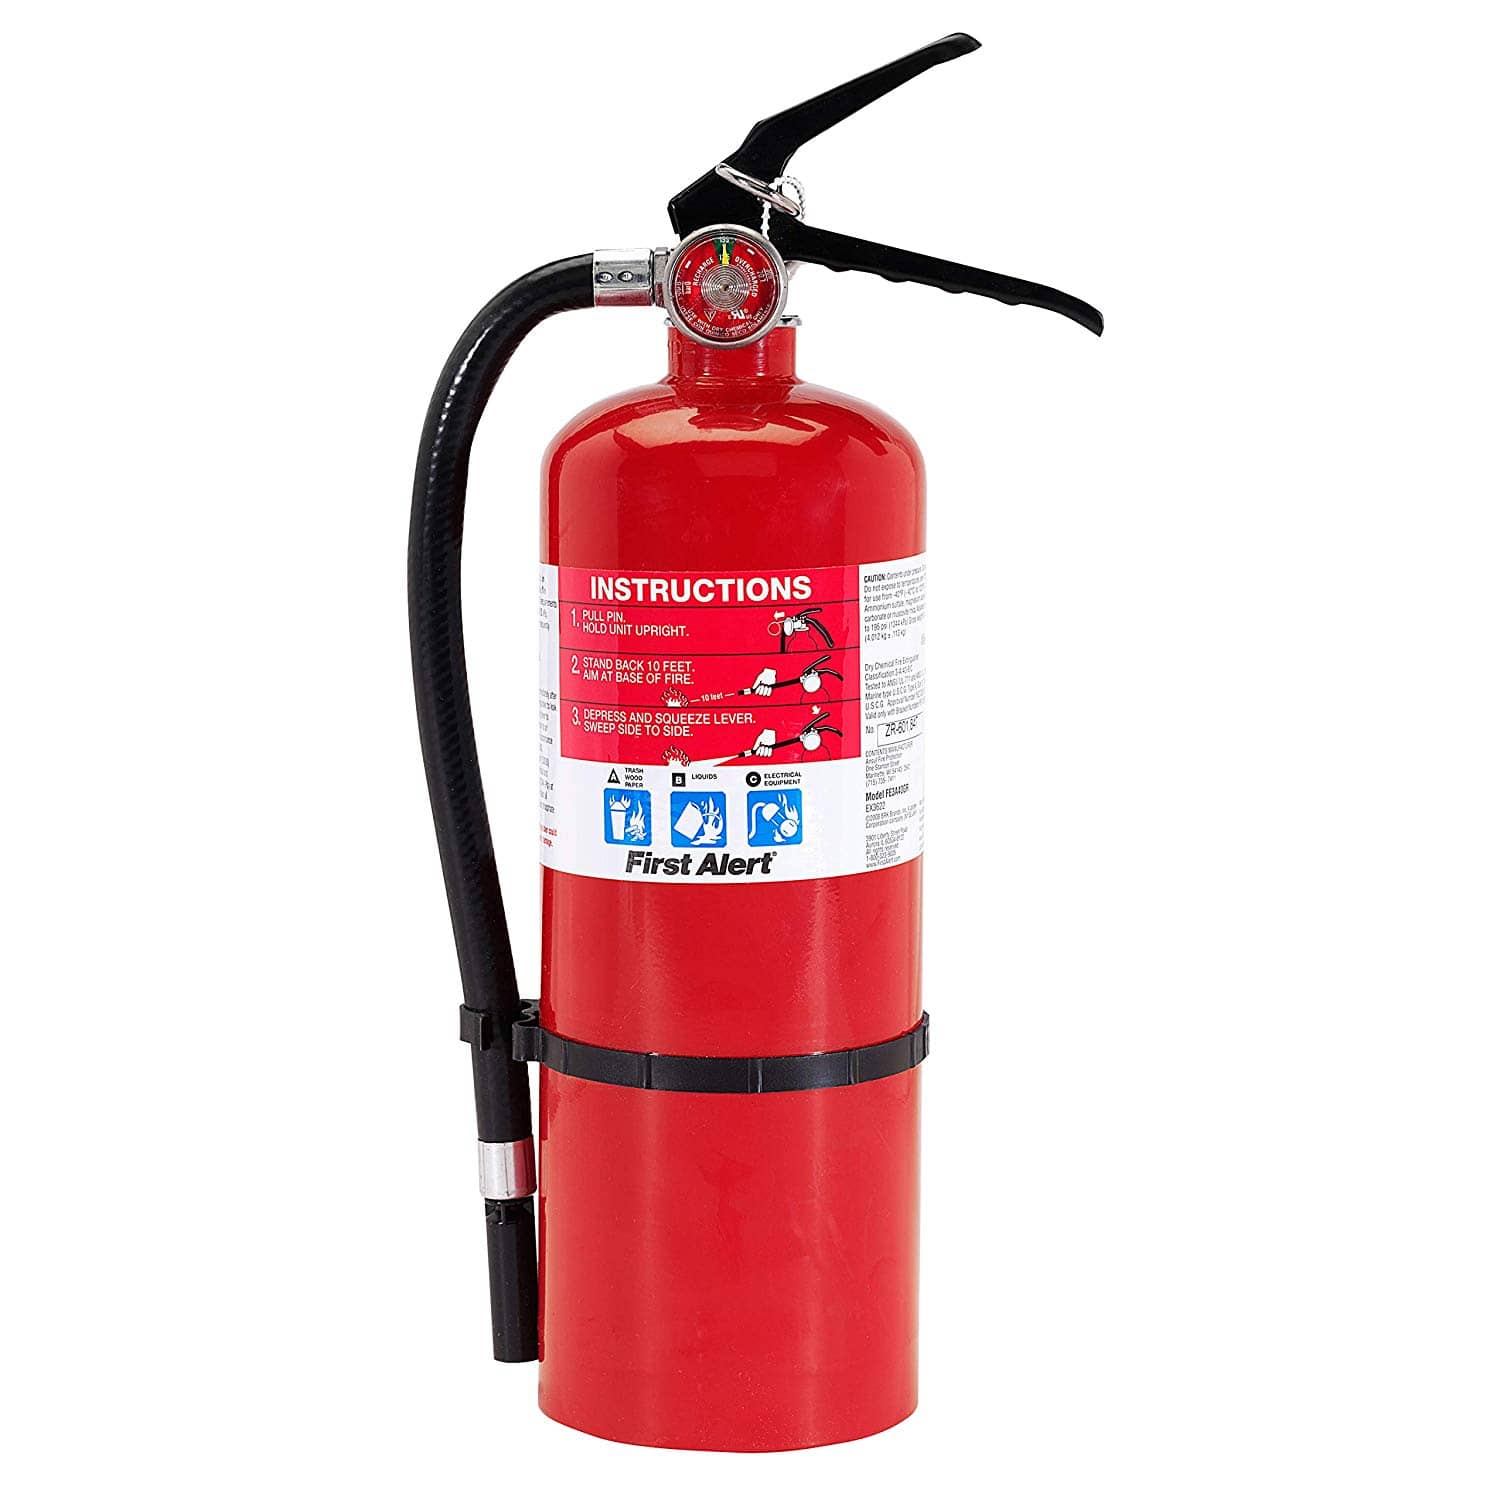 First Alert PRO5 Fire Extinguisher